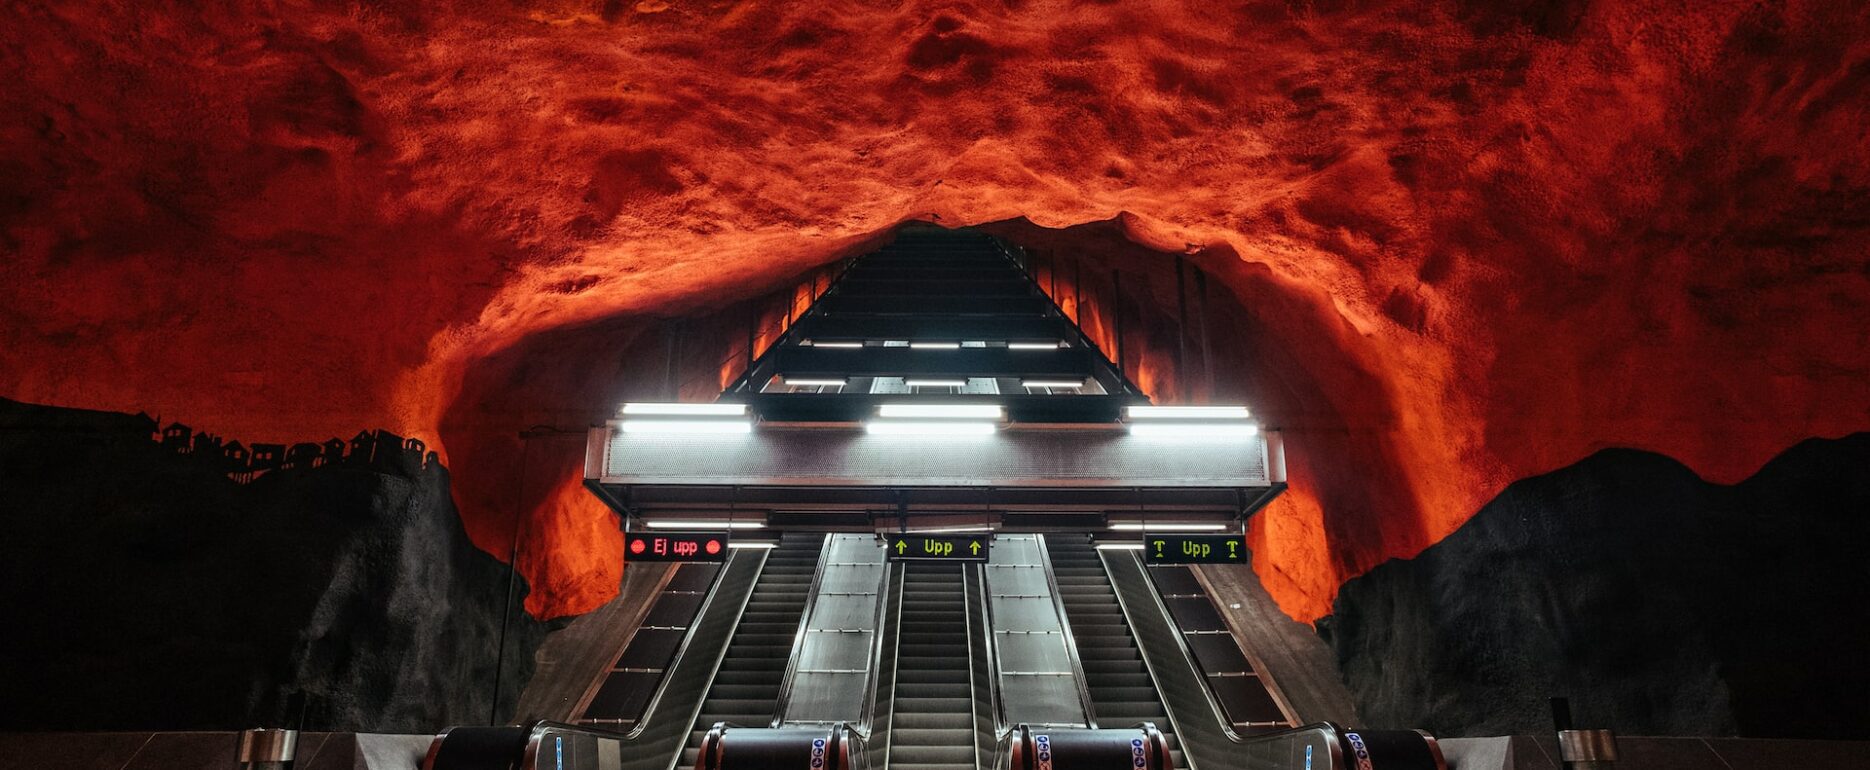 Photograph of interior of Solna Centrum metro station